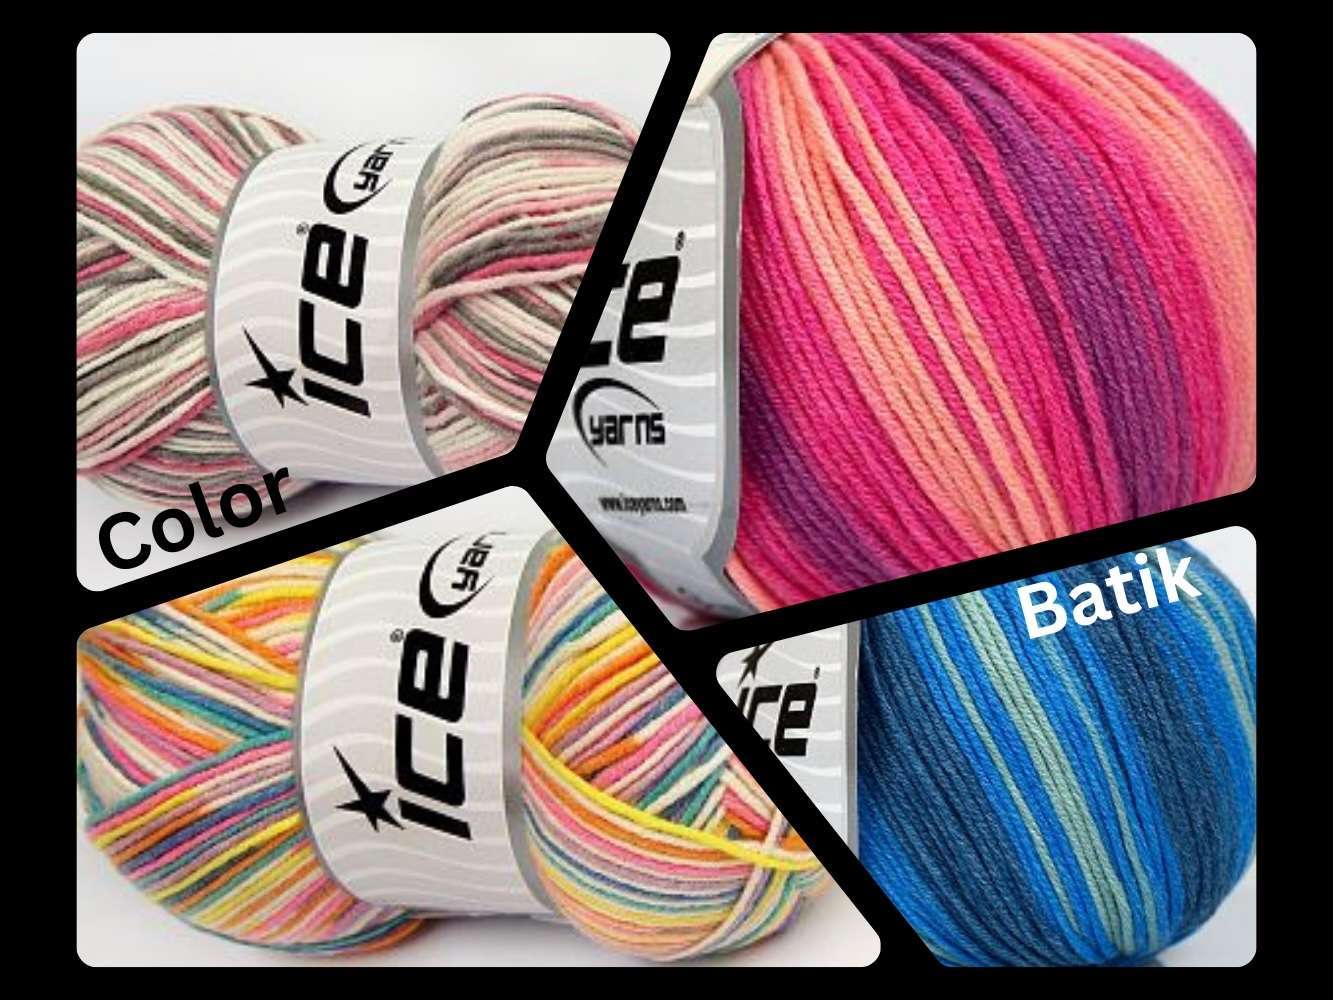 ice-yarn-lorena-color-batik